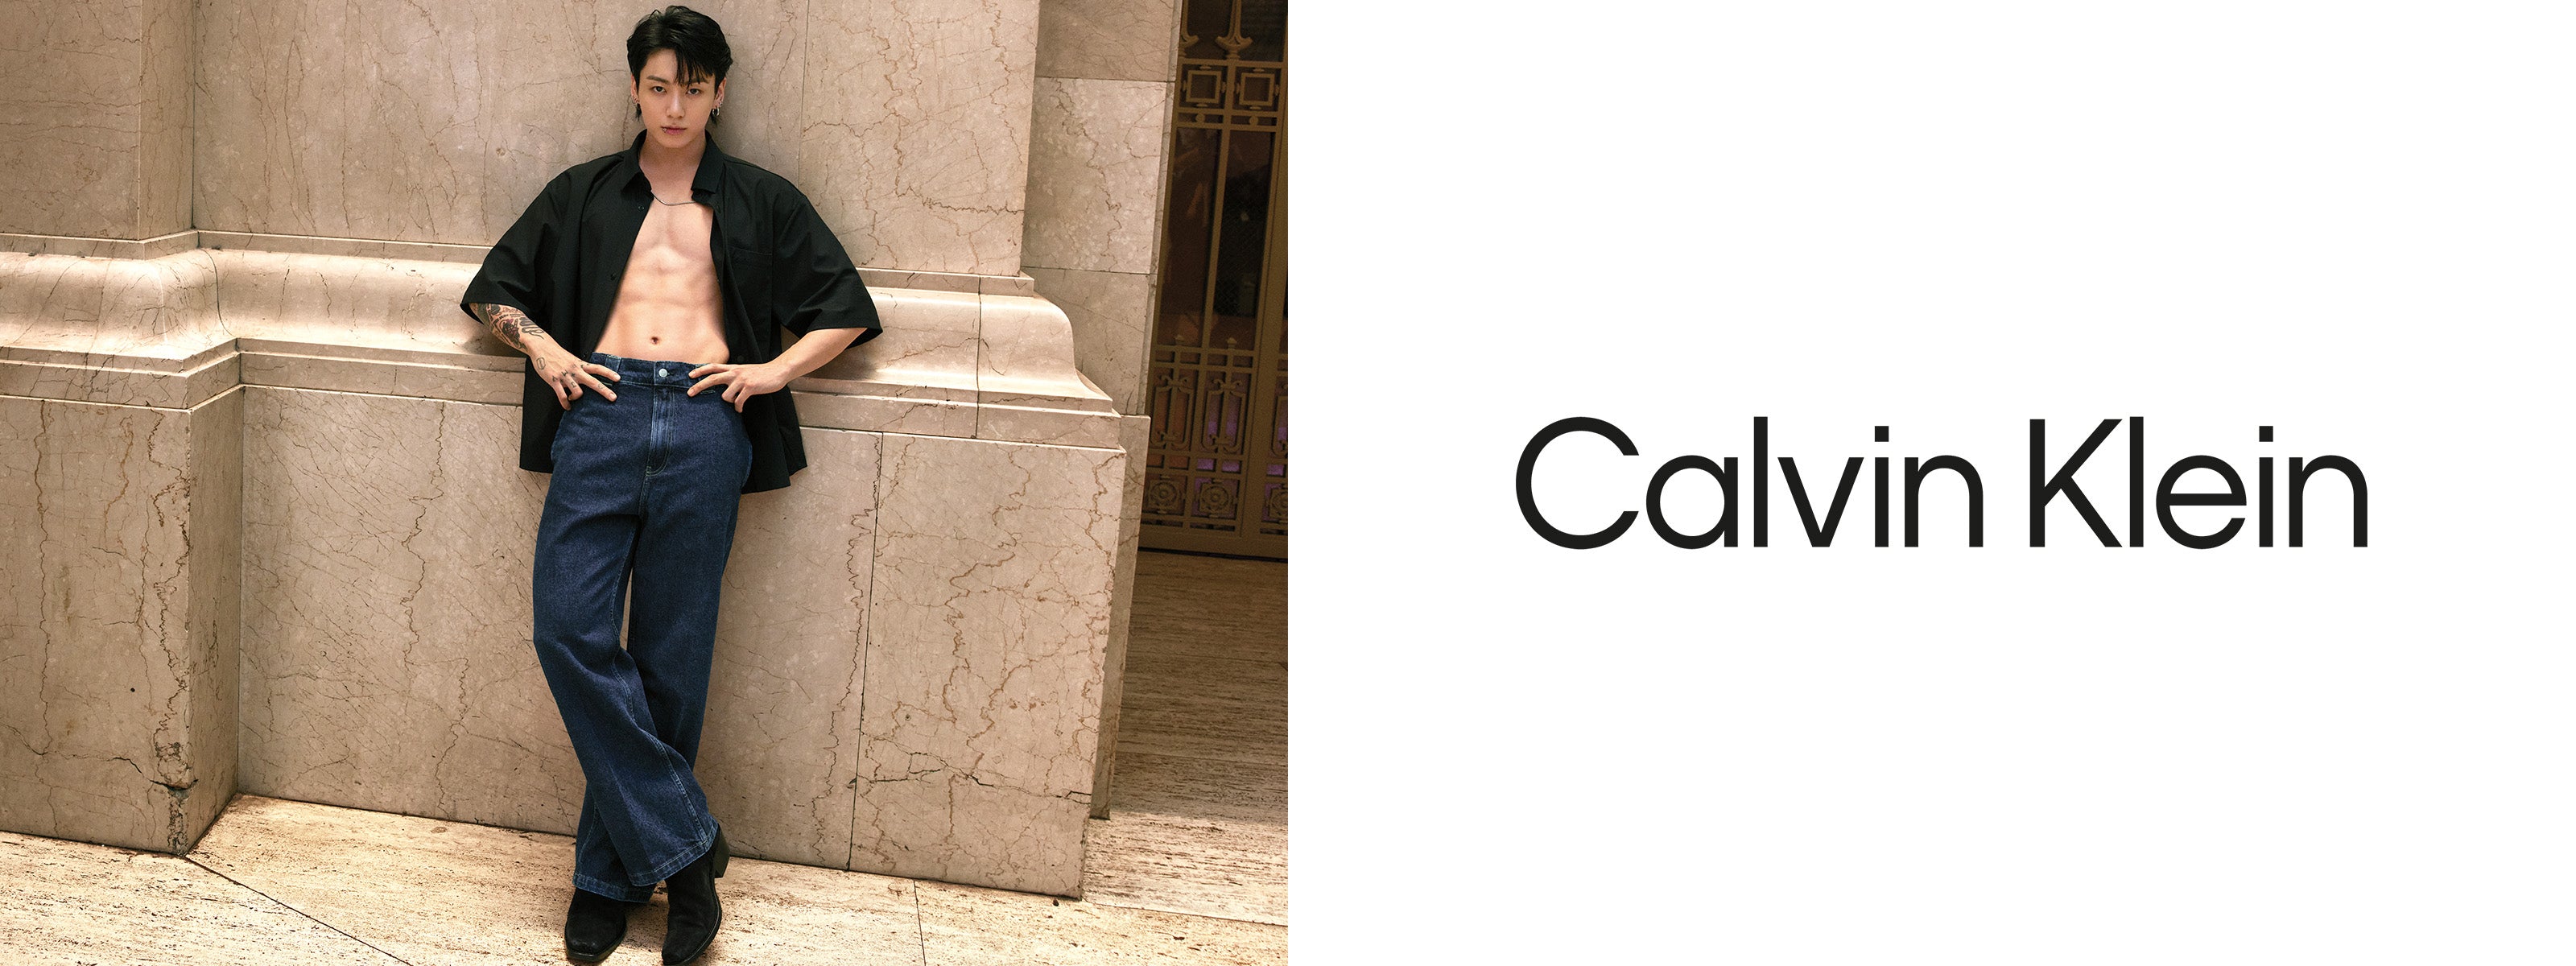 Calvin Klein Unlined Women's Bralette, Multicolor : : Fashion